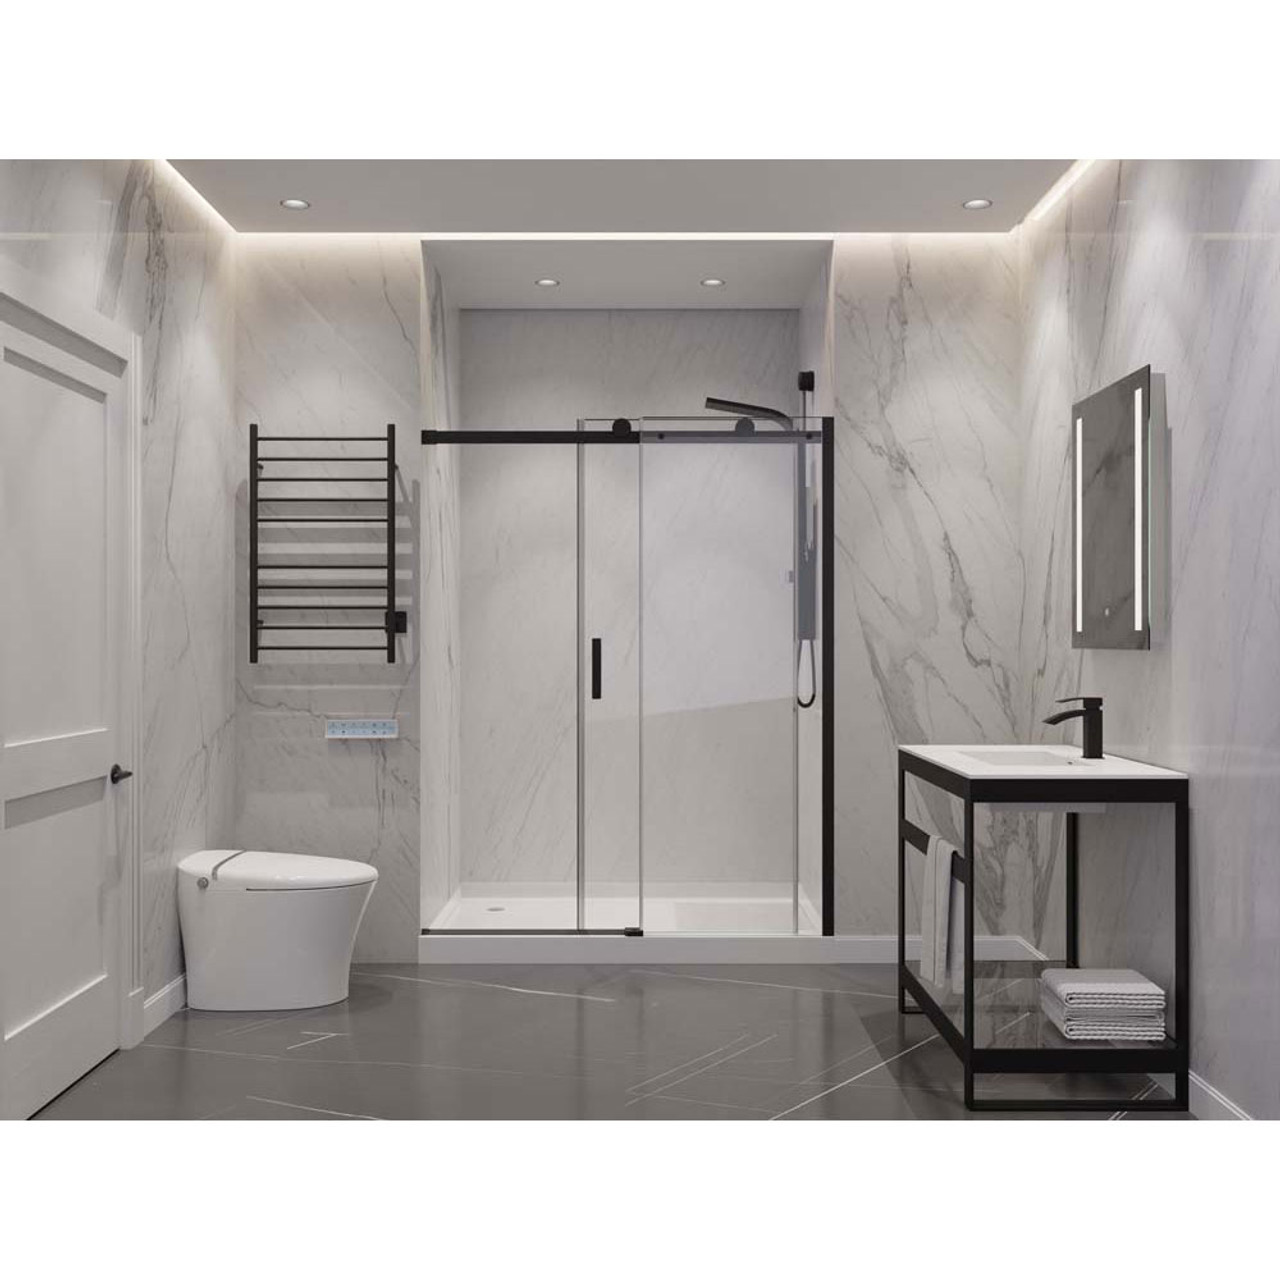 iDesign Cade 4-Piece Bathroom Accessory Set Matte Black